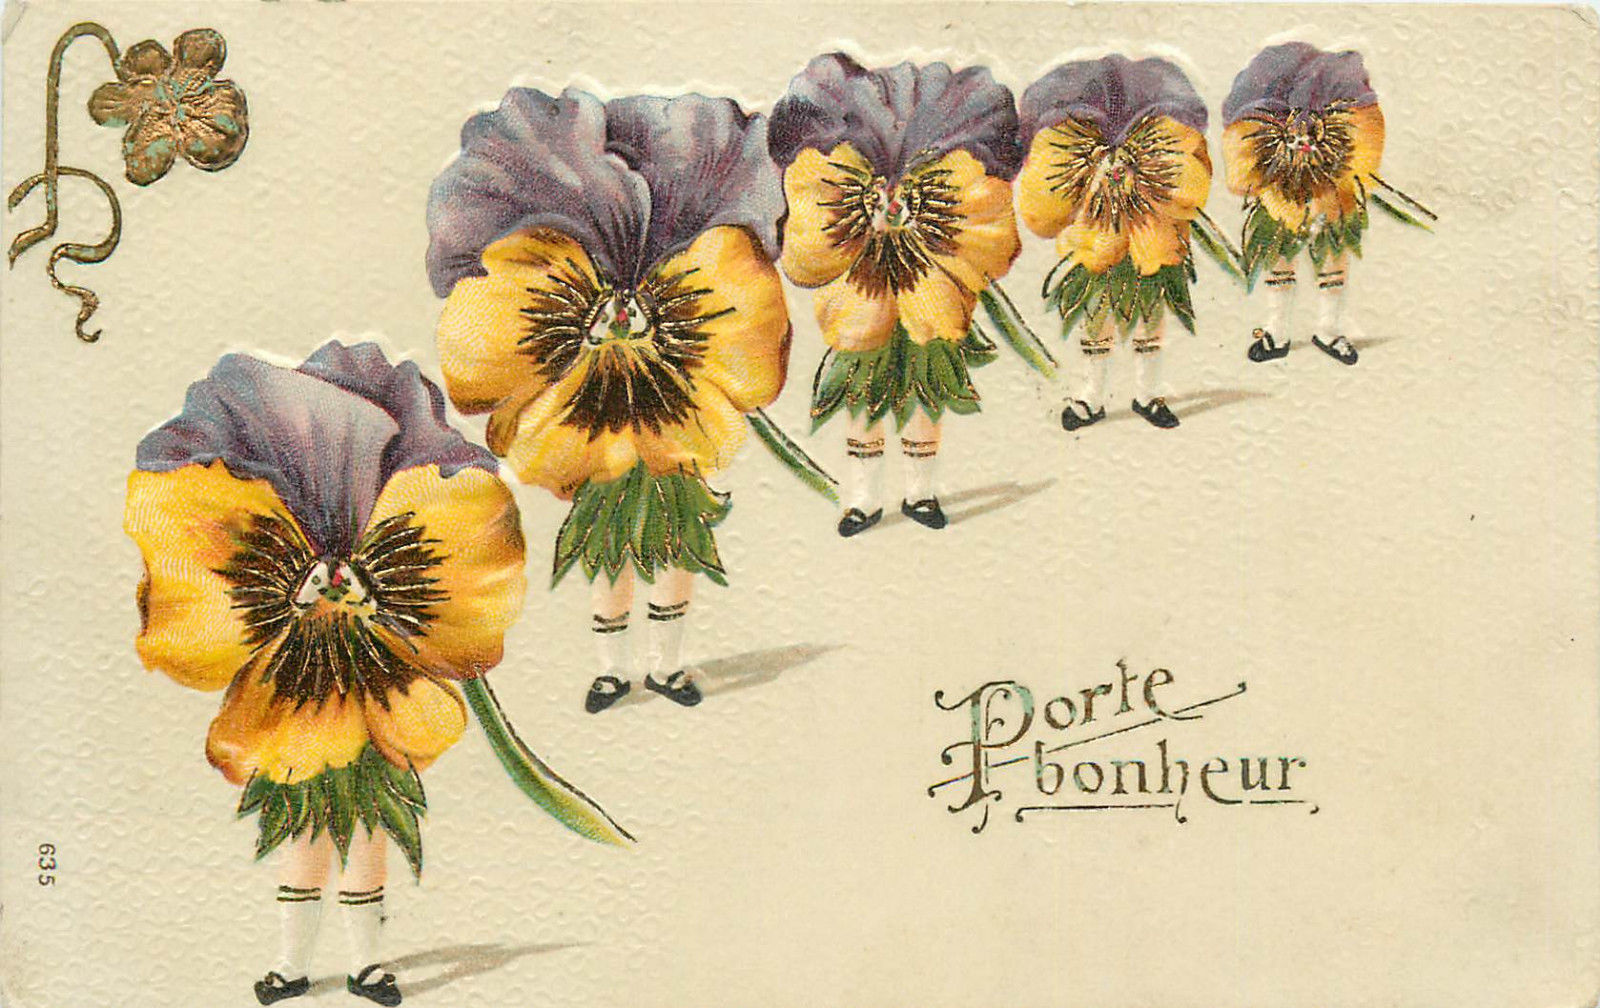 Surrealism Embossed Humanized Heart Ease Pansy Flower Fleurs Porte Bonheur Hippostcard